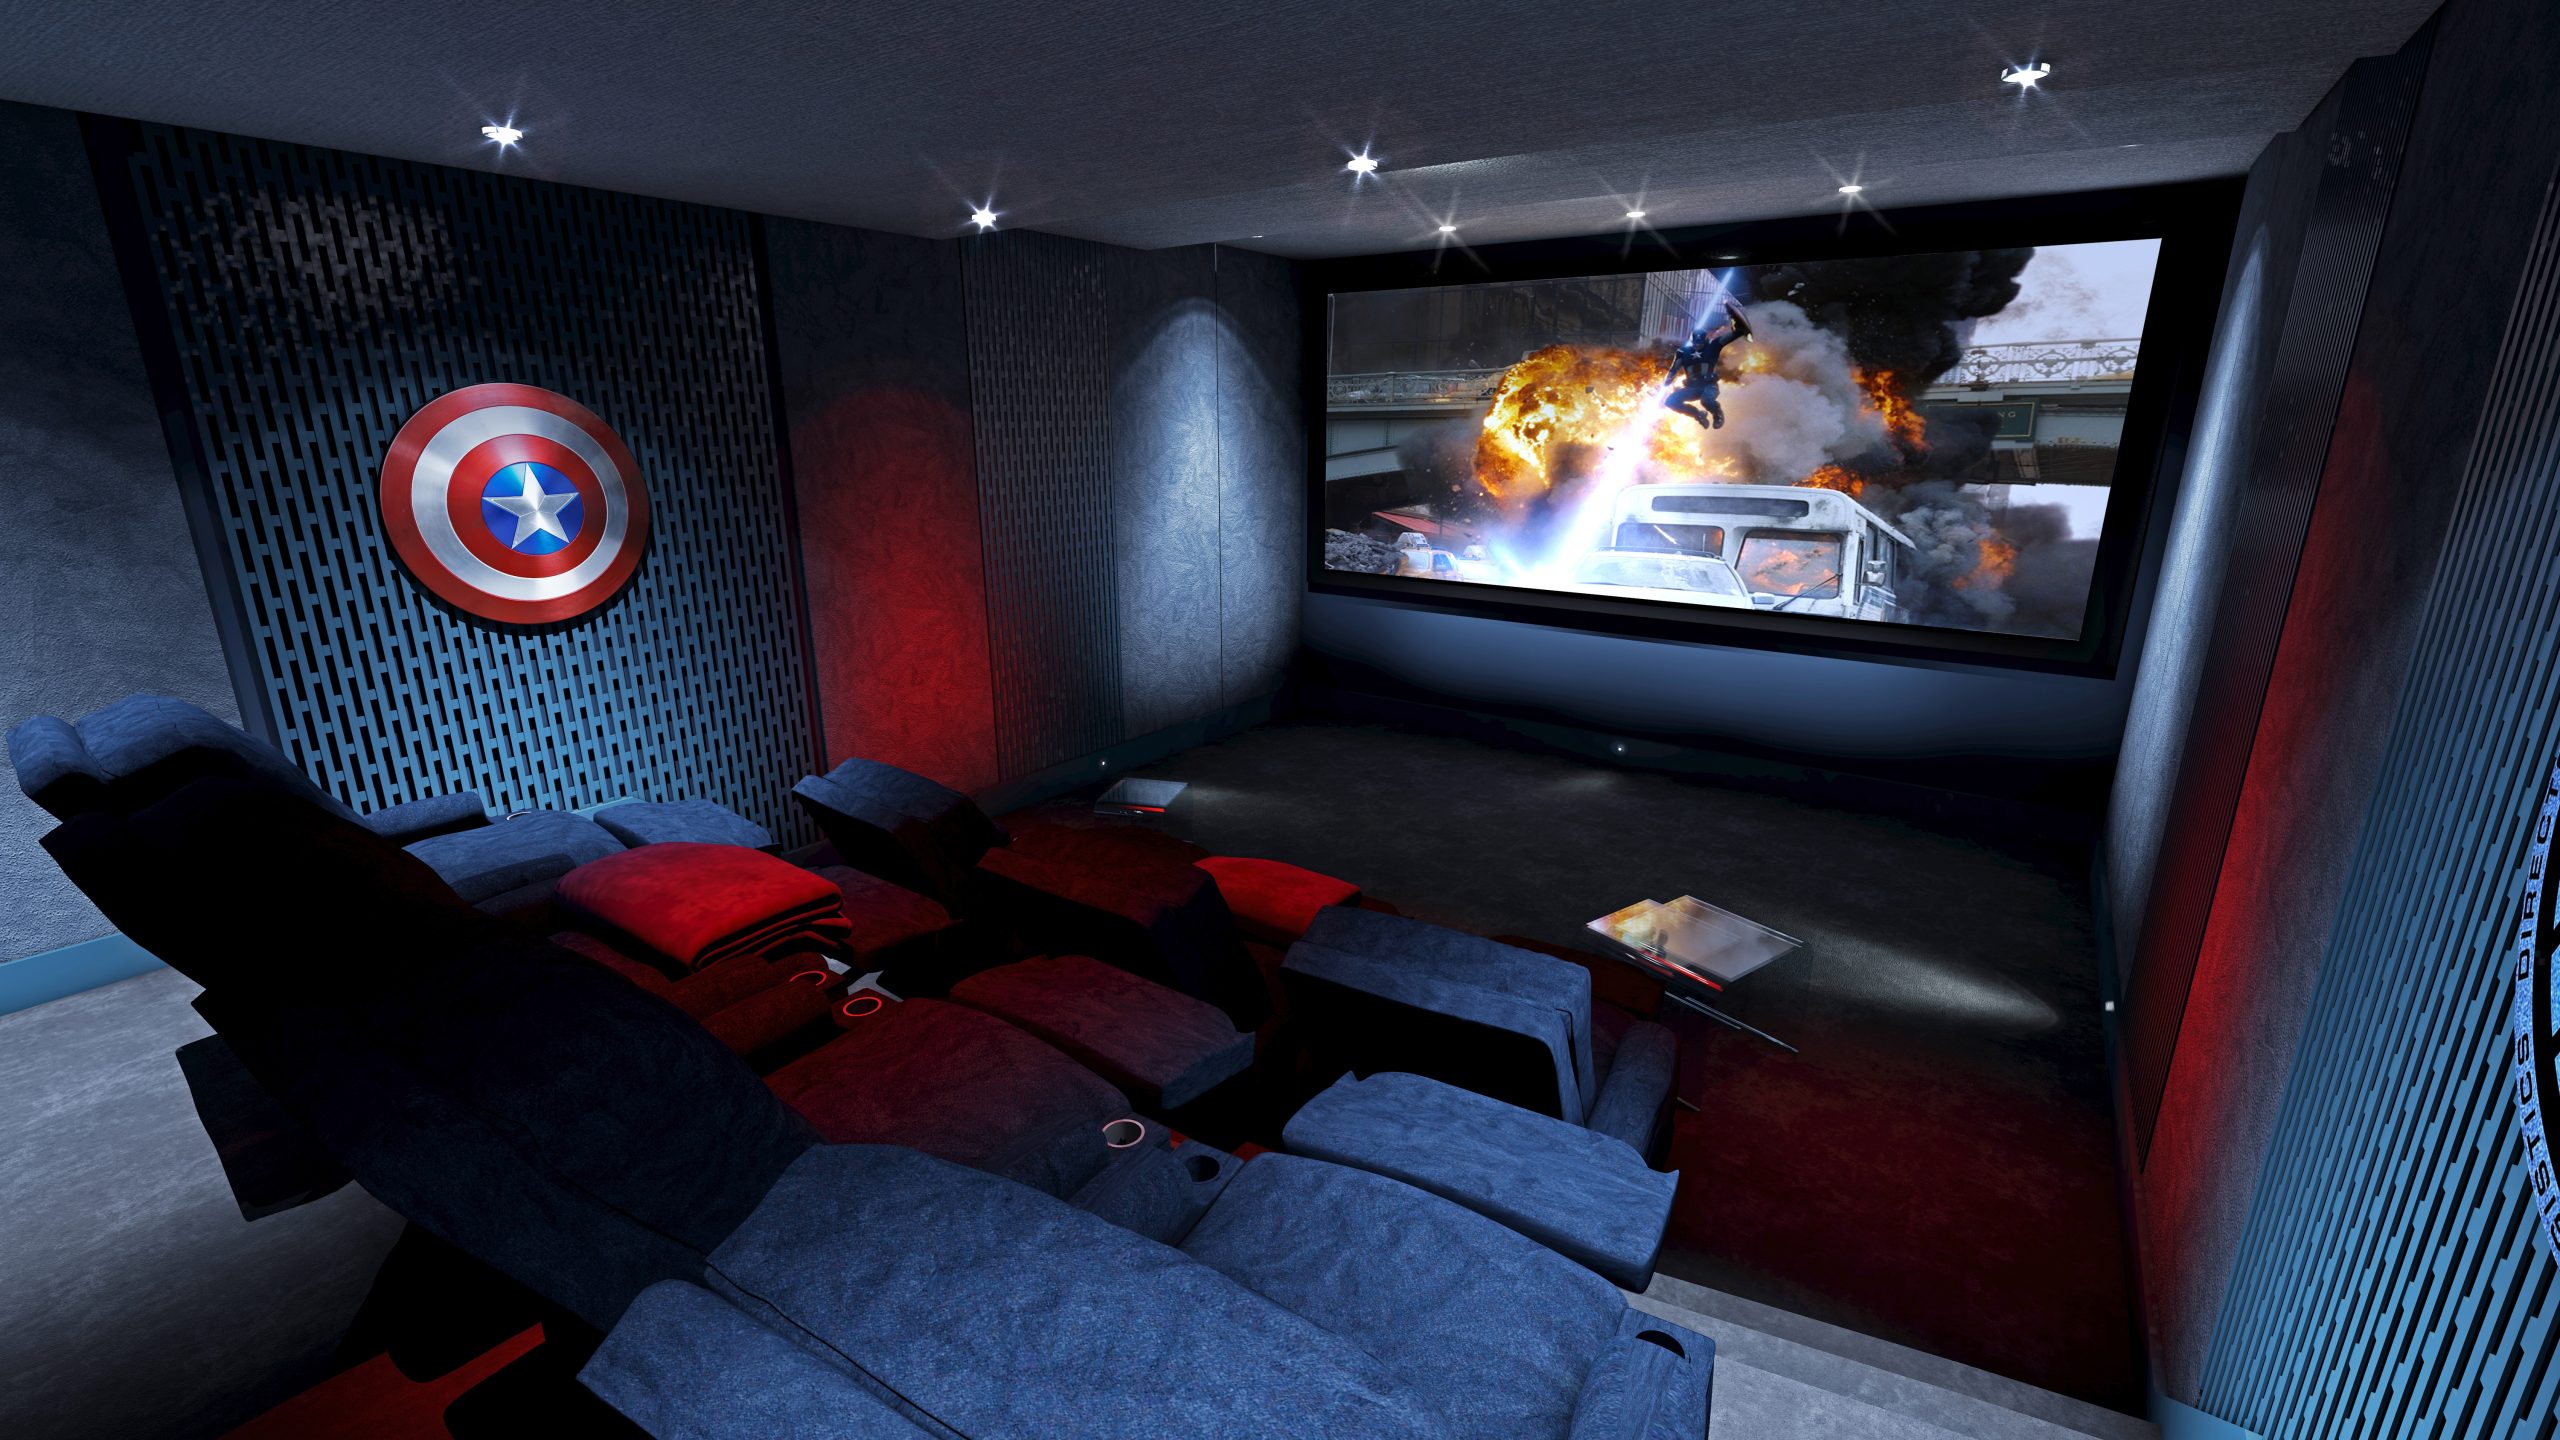 An Avengers themed home cinema for a super-fan!